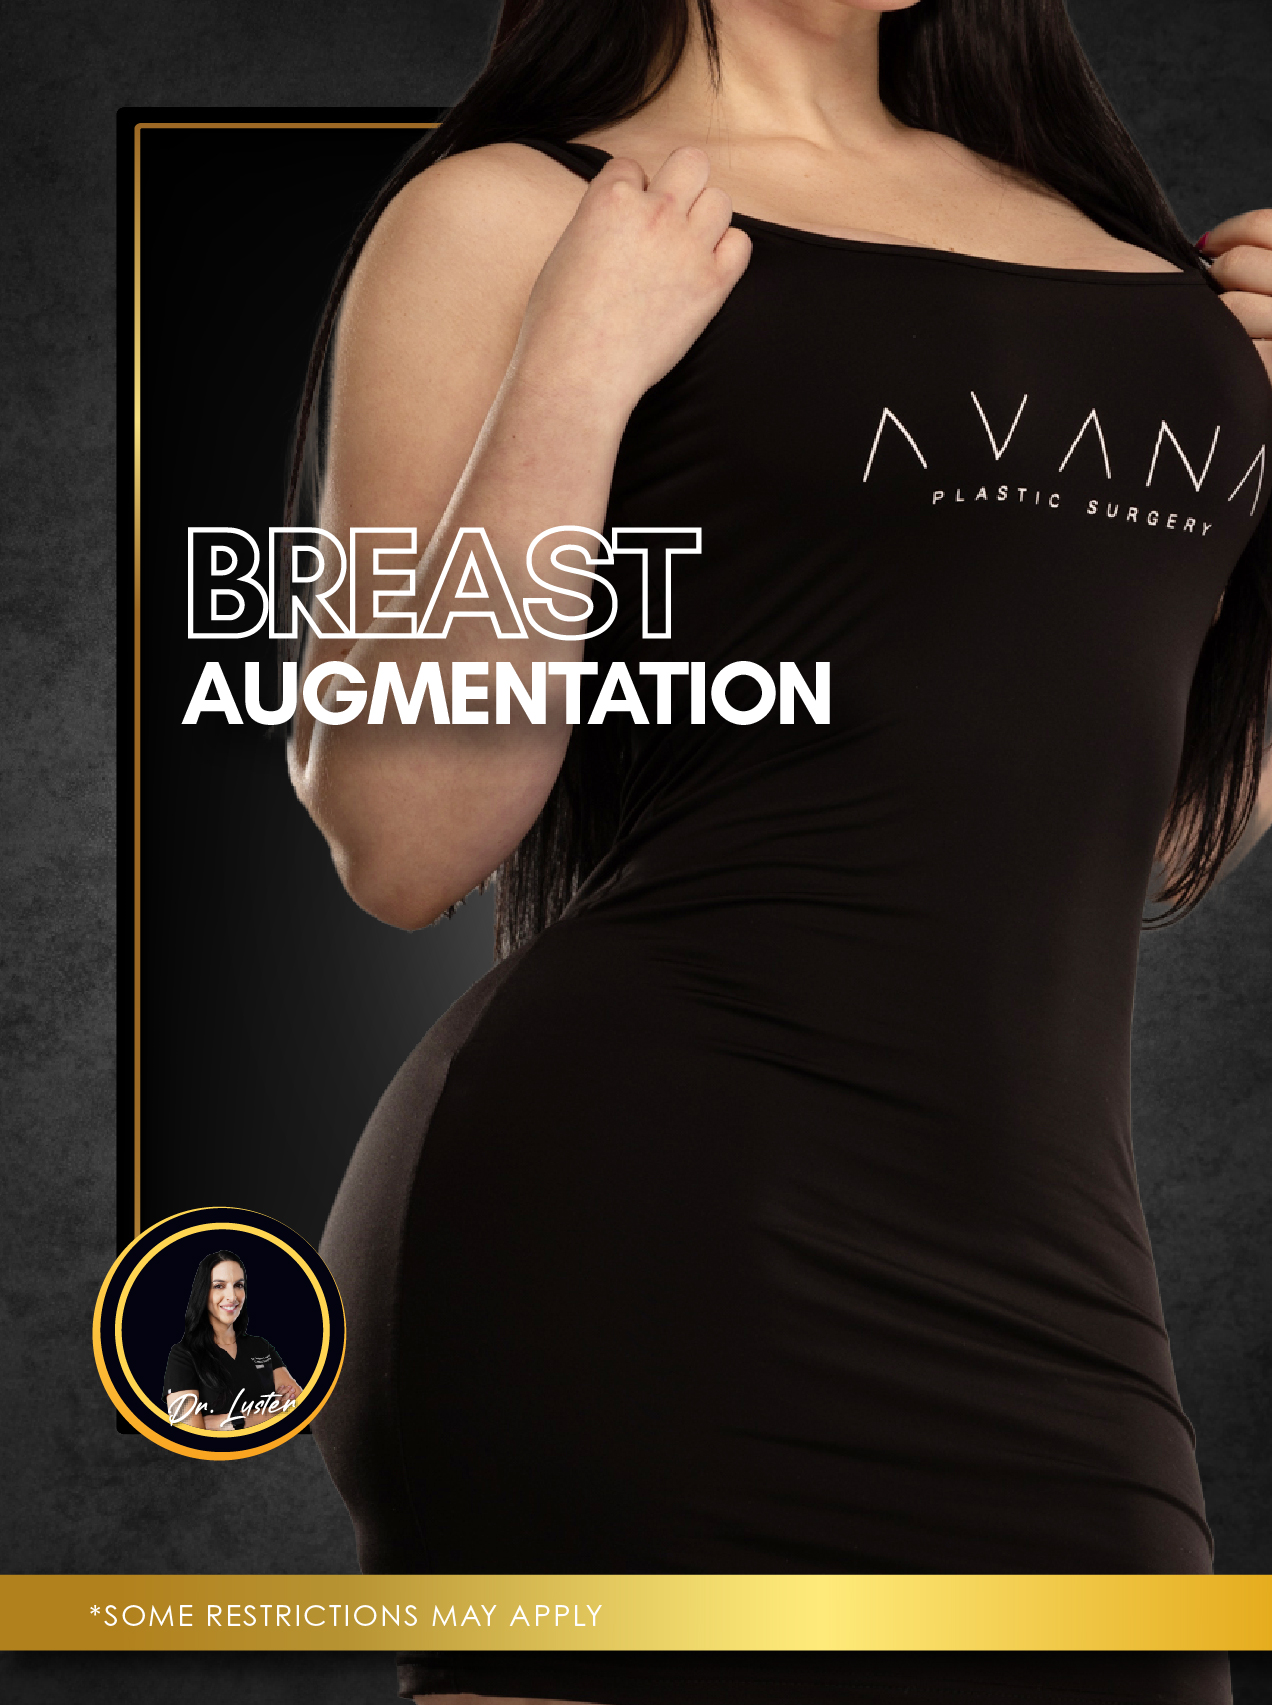 Breast augmentation starting at $2,800